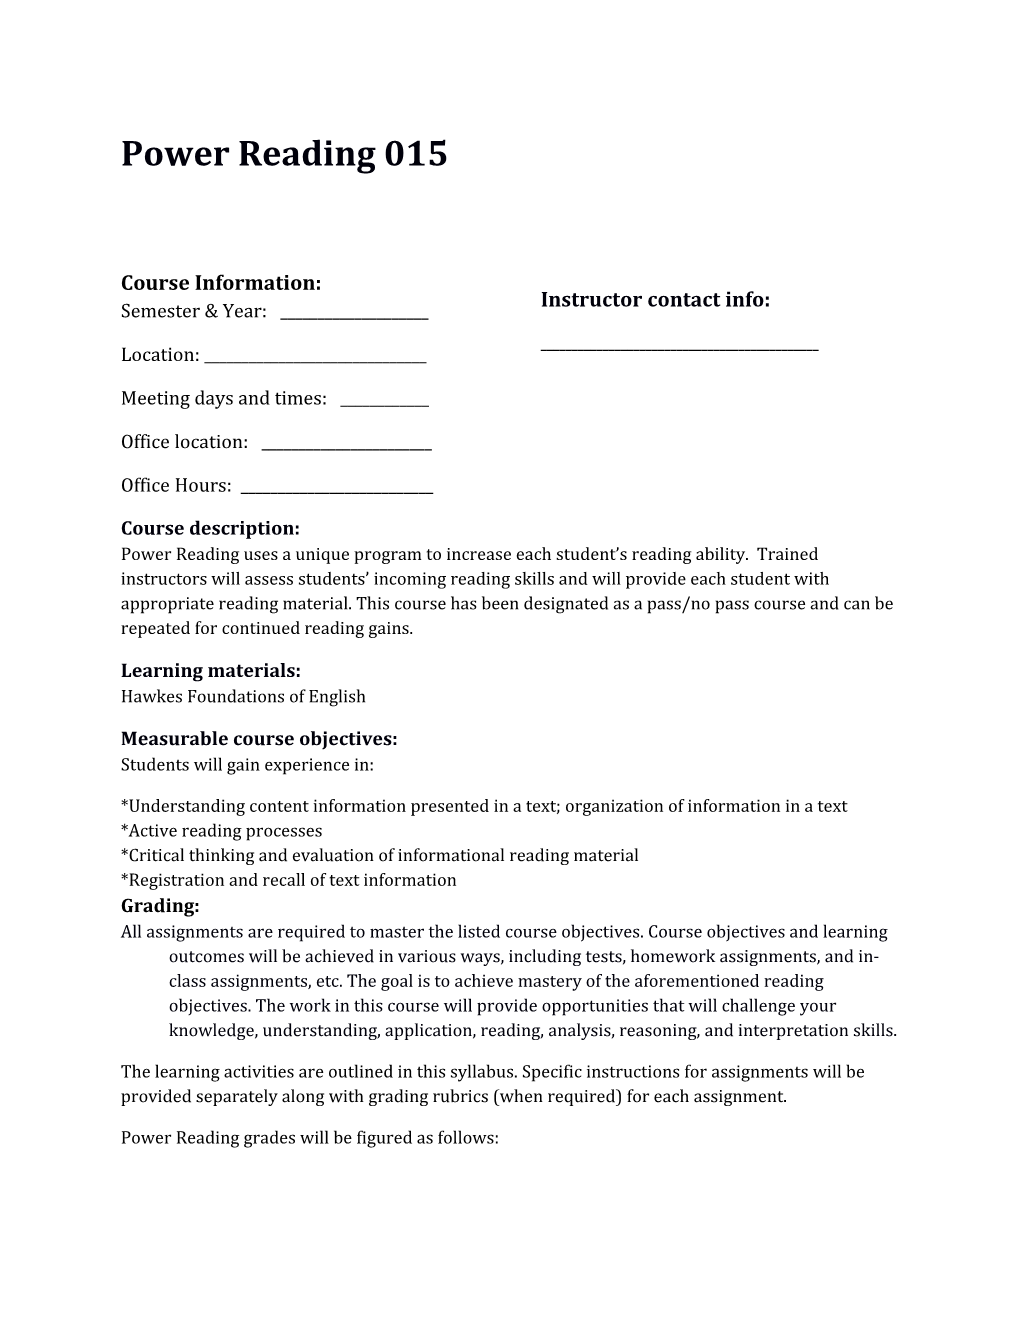 Power Reading 015